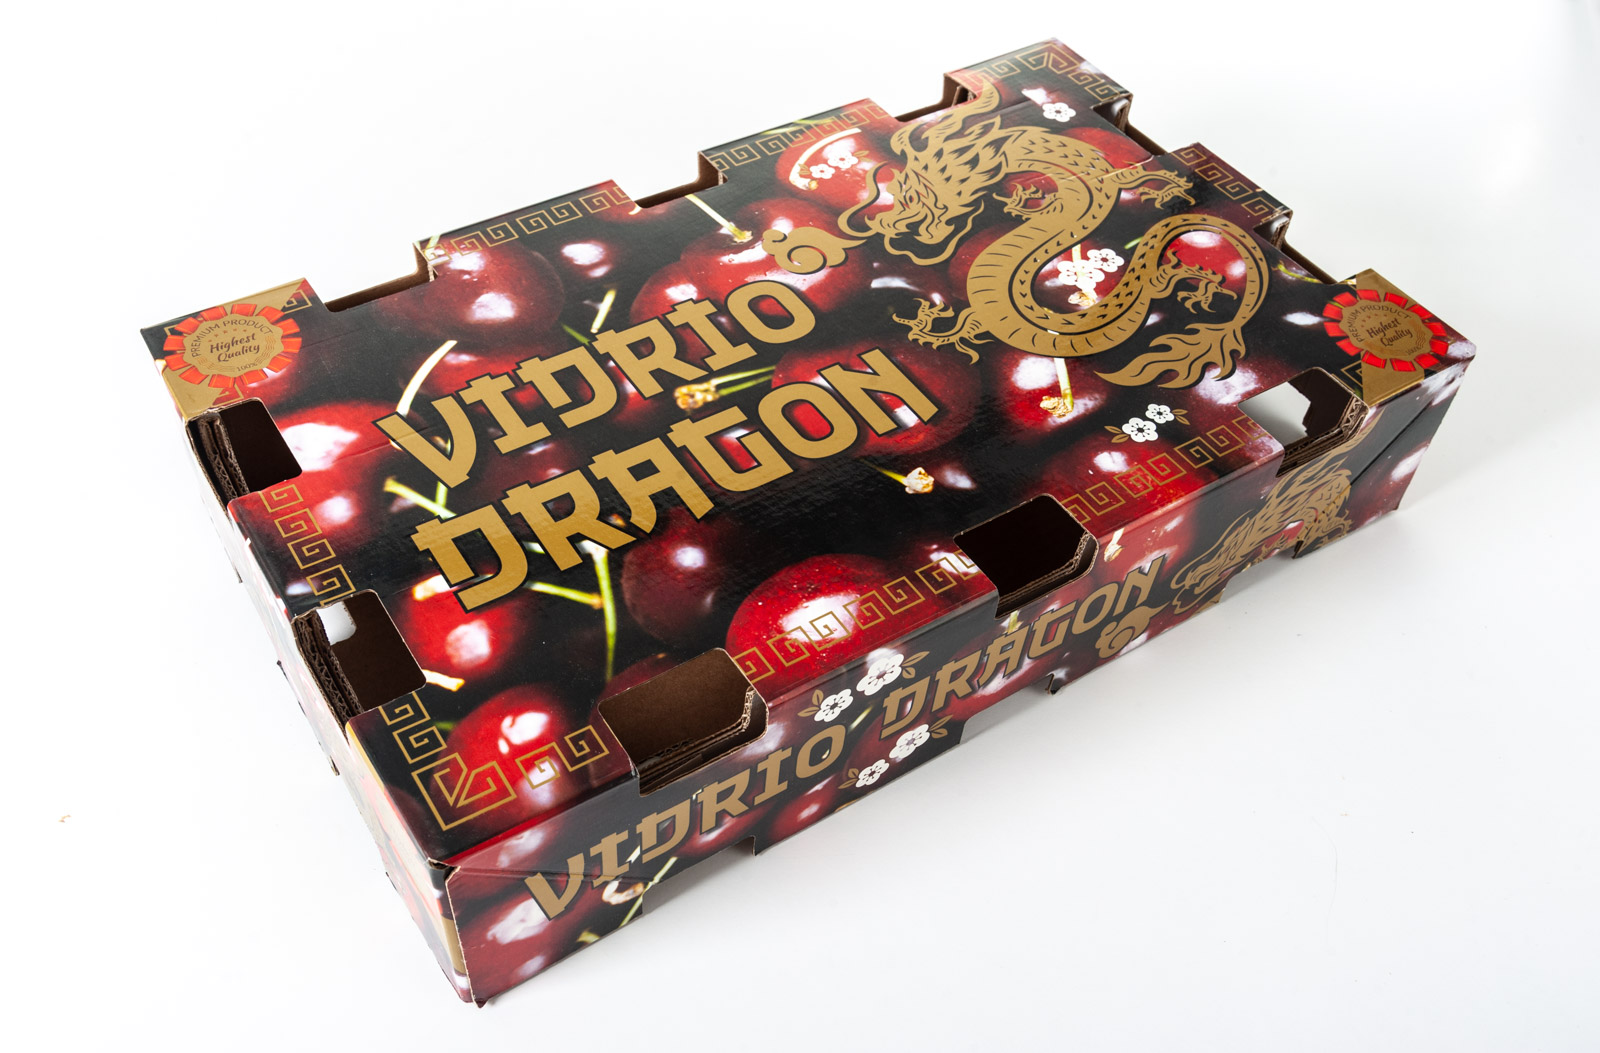 Diseño envase de cartón para Cerezas Vidrio Dragon exportación - Imagina Arte Gráfico